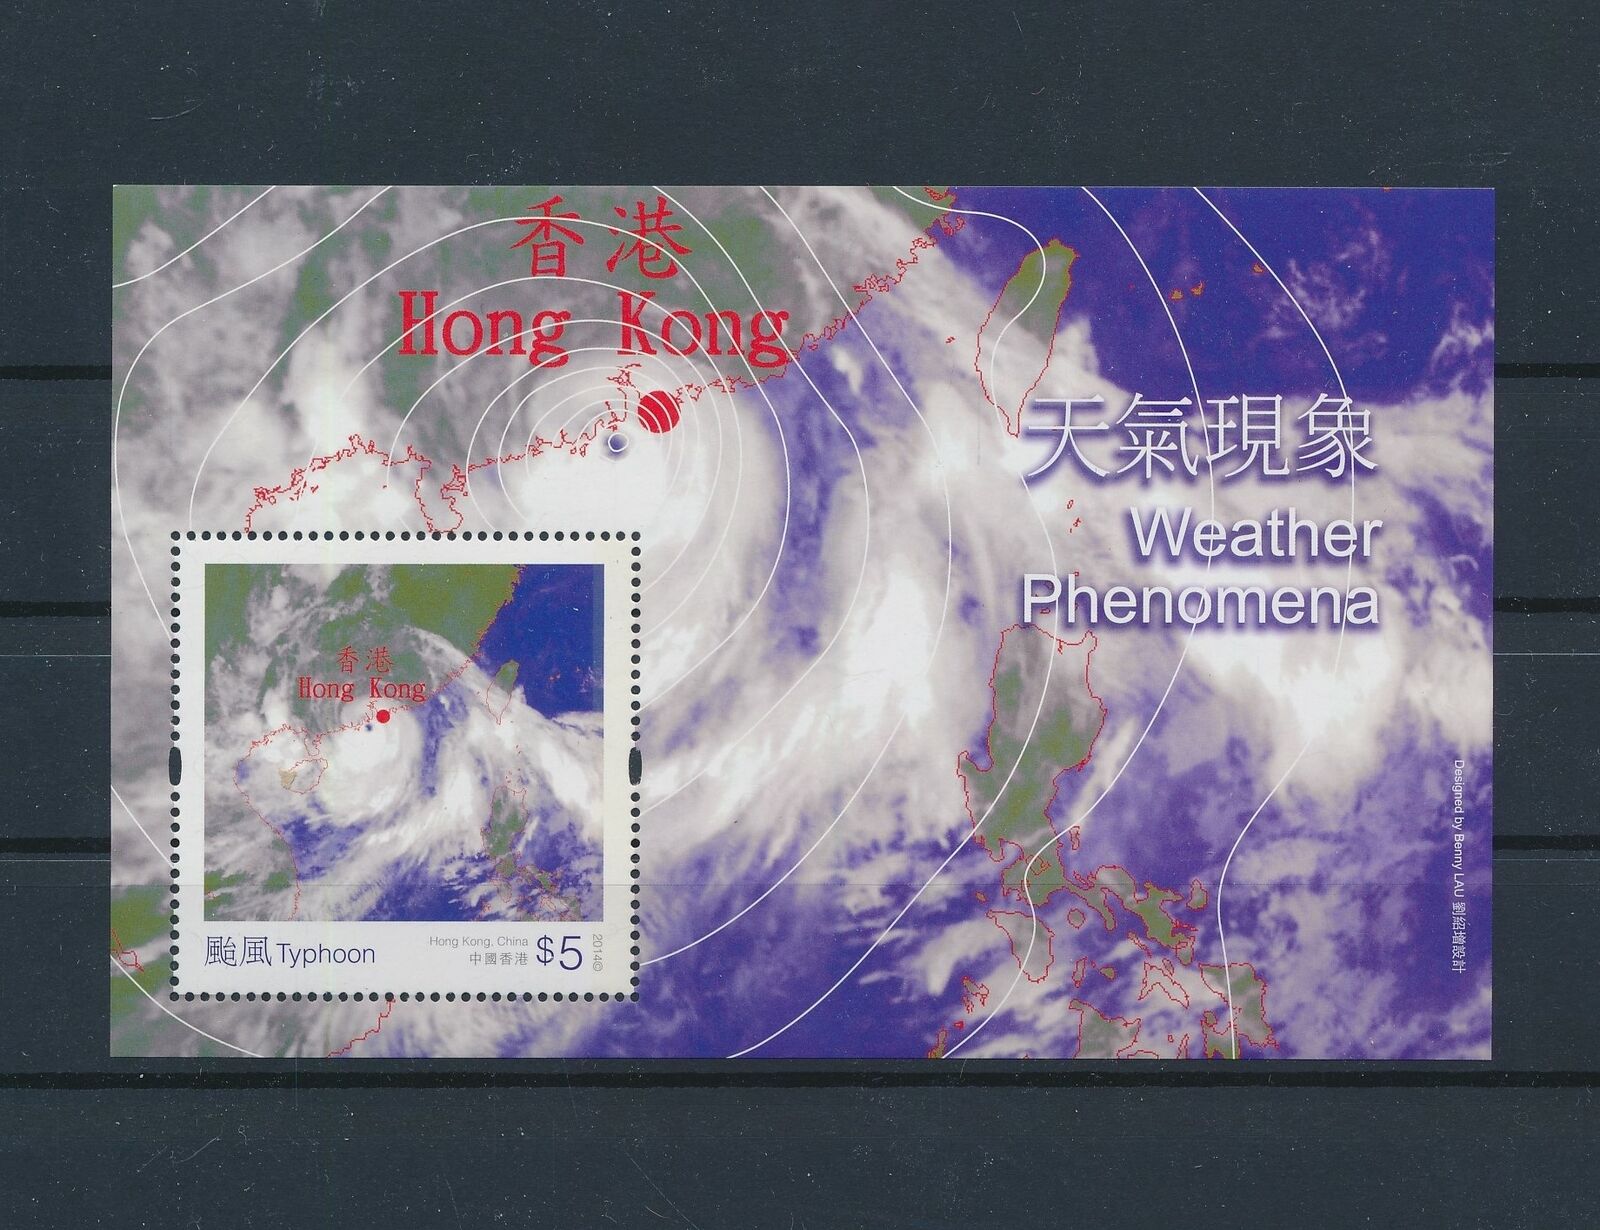 Lo27094 Hong Kong Typhoon Weather Phenomena Good Sheet Mnh